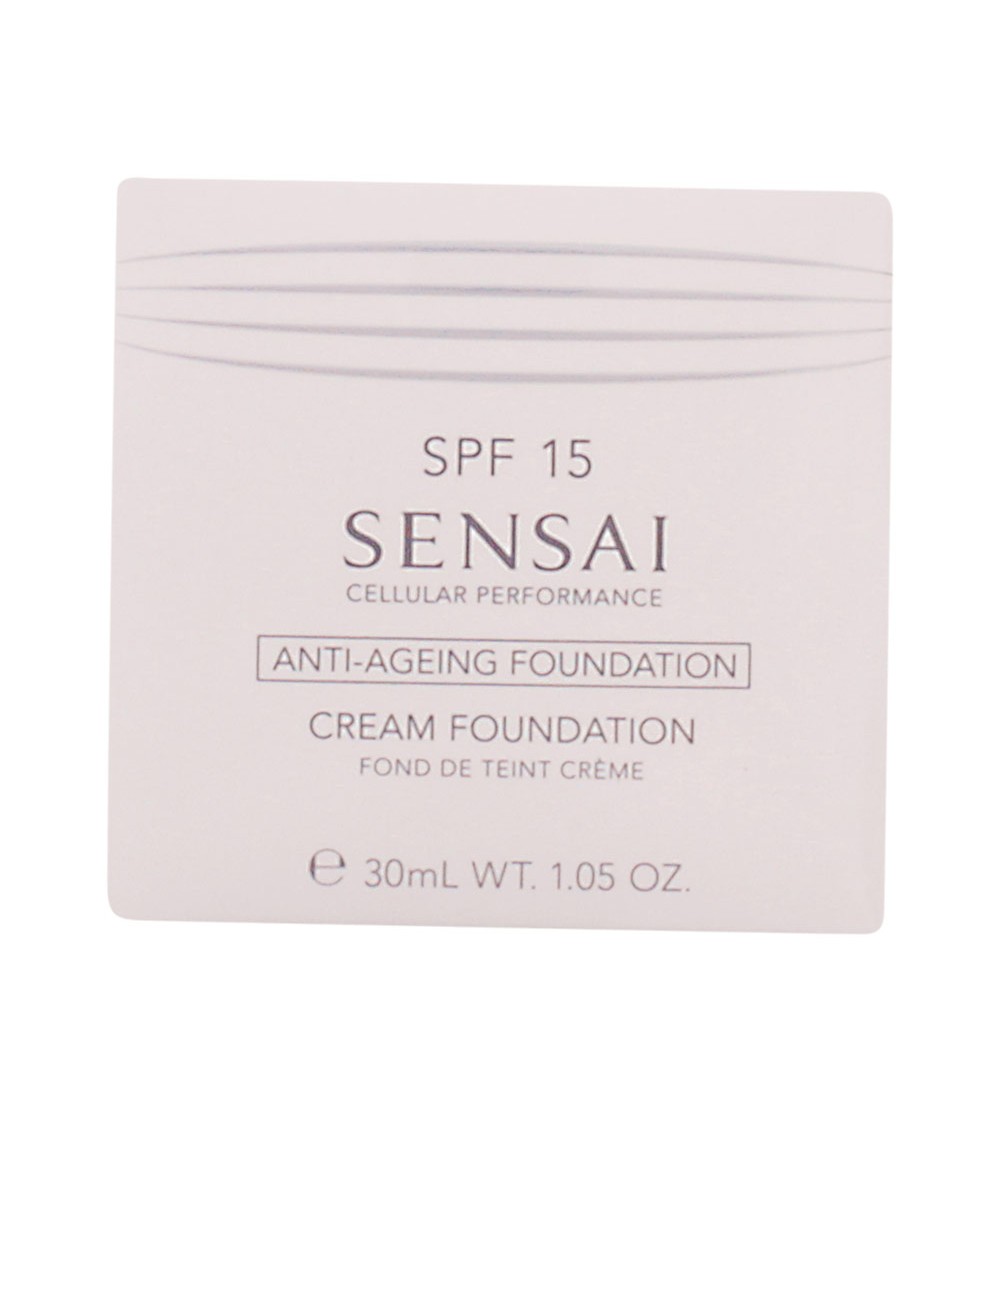 SENSAI CP cream foundation SPF15 30ml